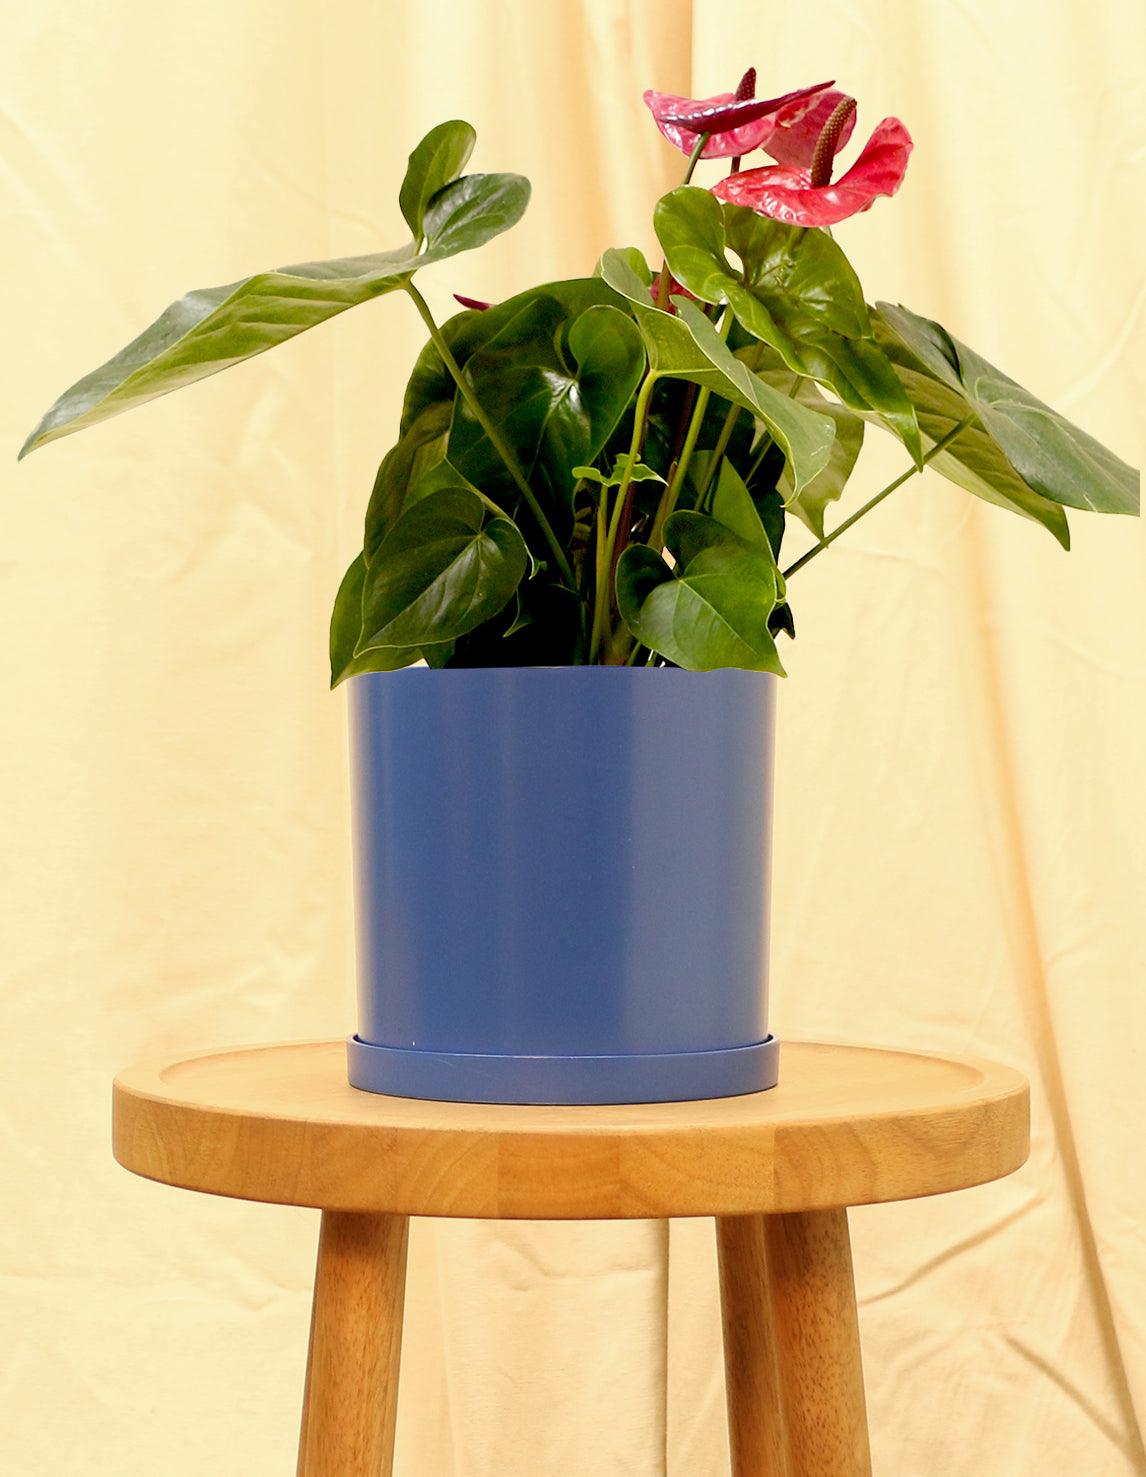 Medium Red Anthurium Tailflower in blue pot.